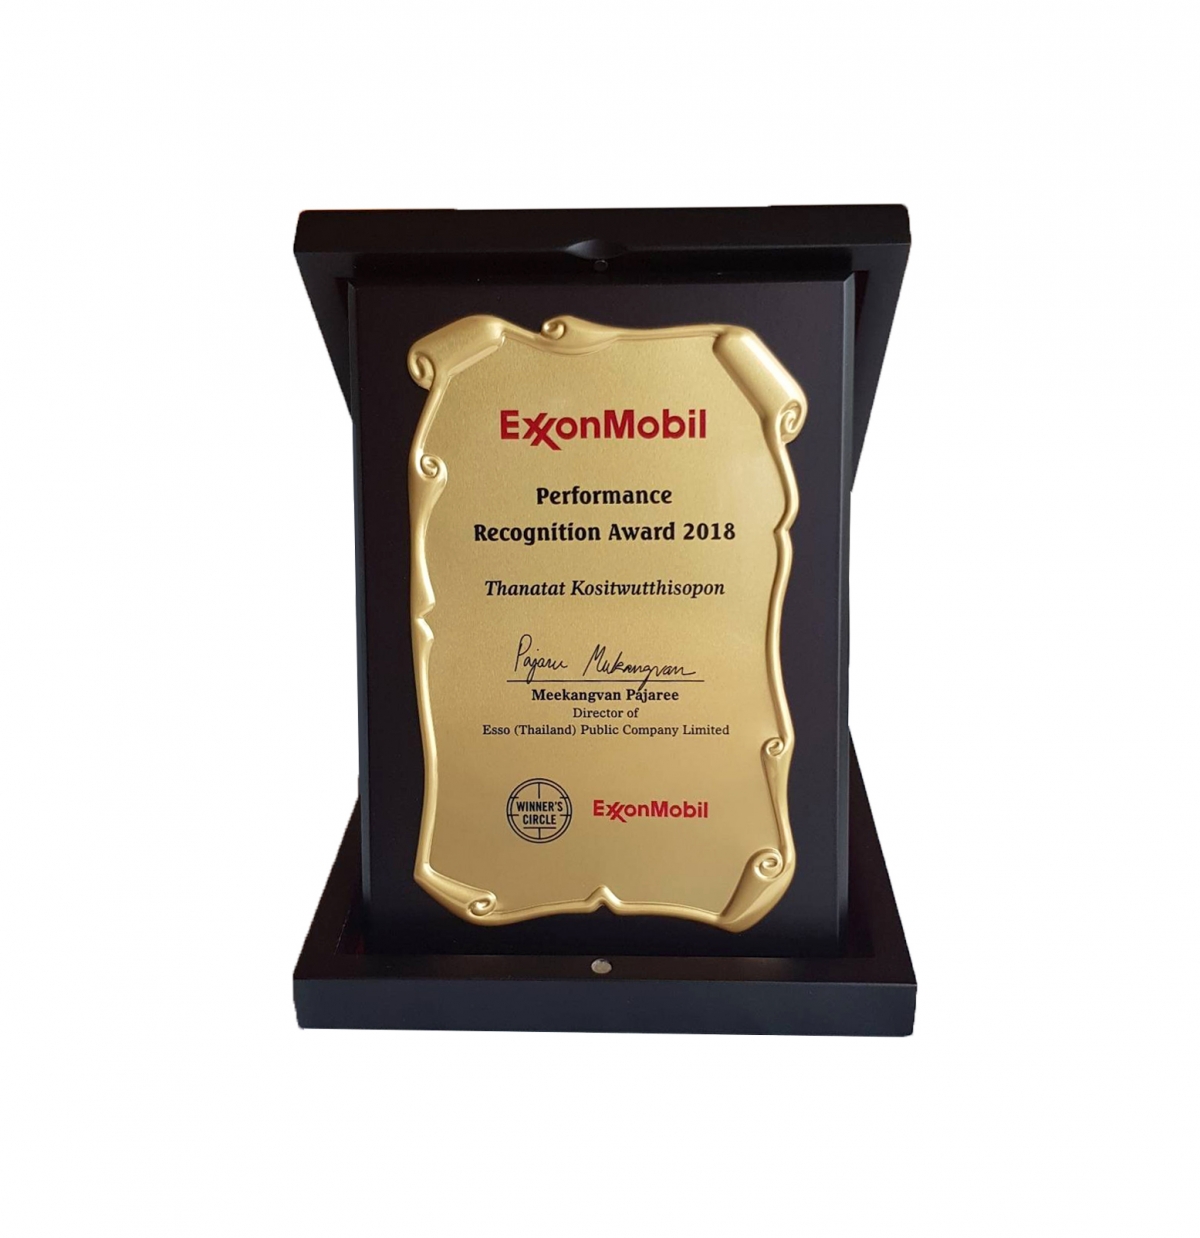 ExxonMobil Performance Recognition Award 2018